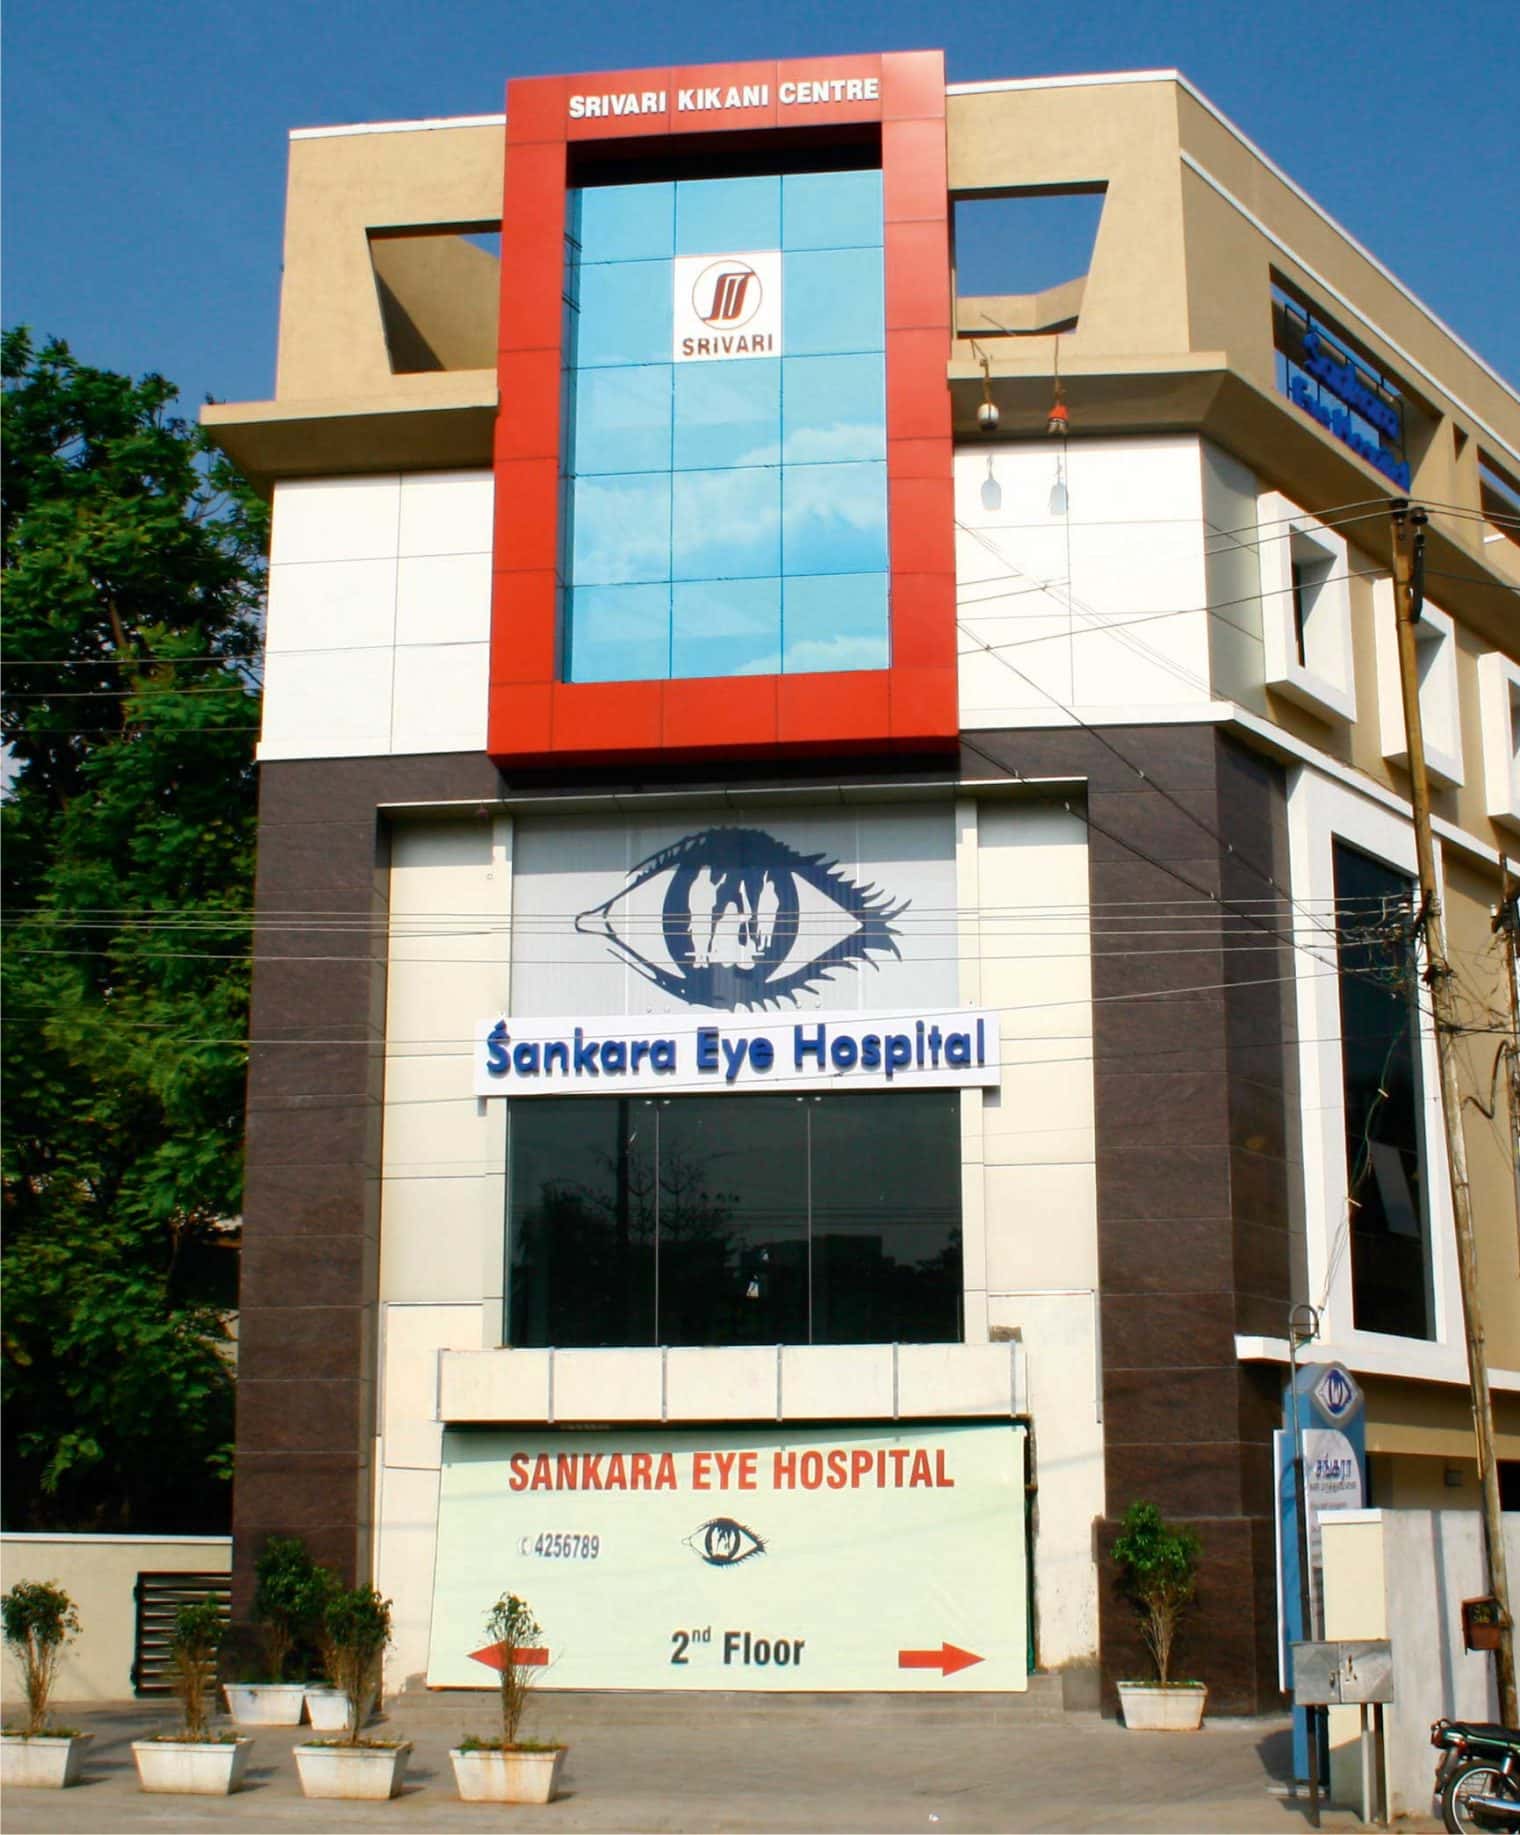 Sankara eye specialty hospital located in Coimbatore RS. Puram